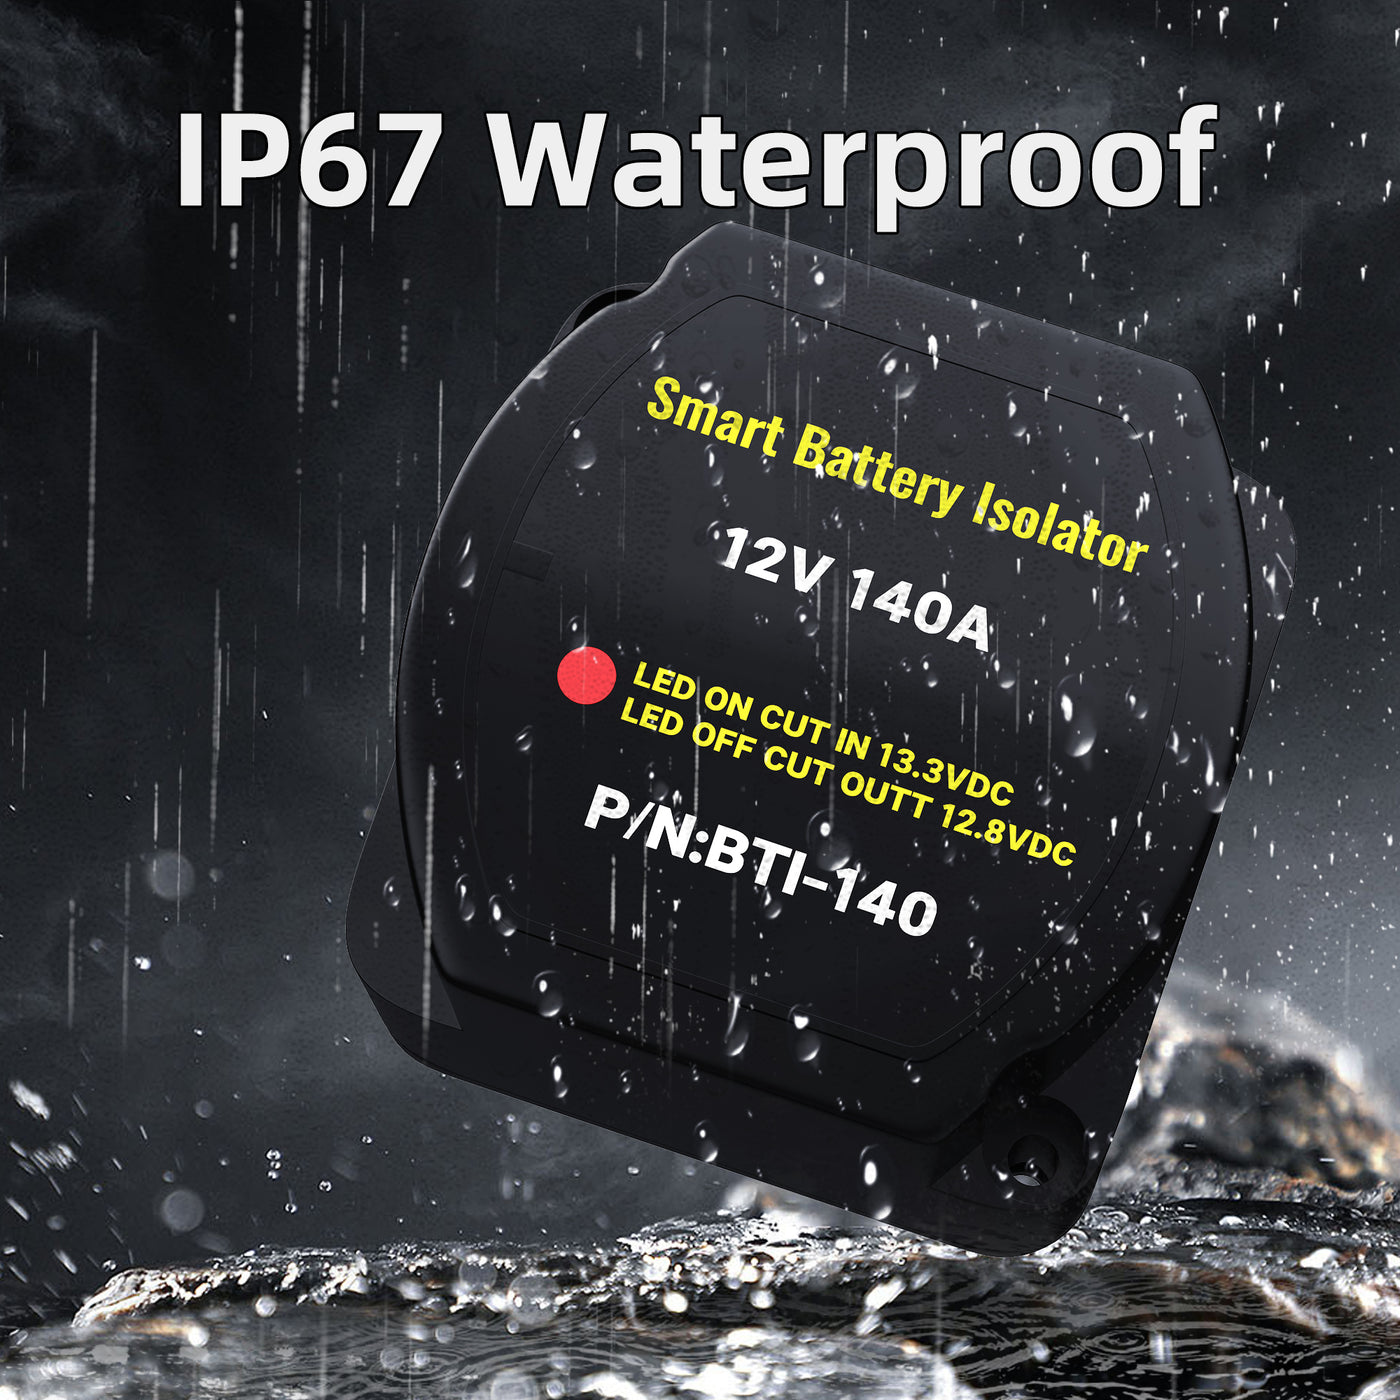 ASW-A401-Kit IP67 Waterproof 140Amp 12VDC VSR Dual Smart Battery Isolator Kit